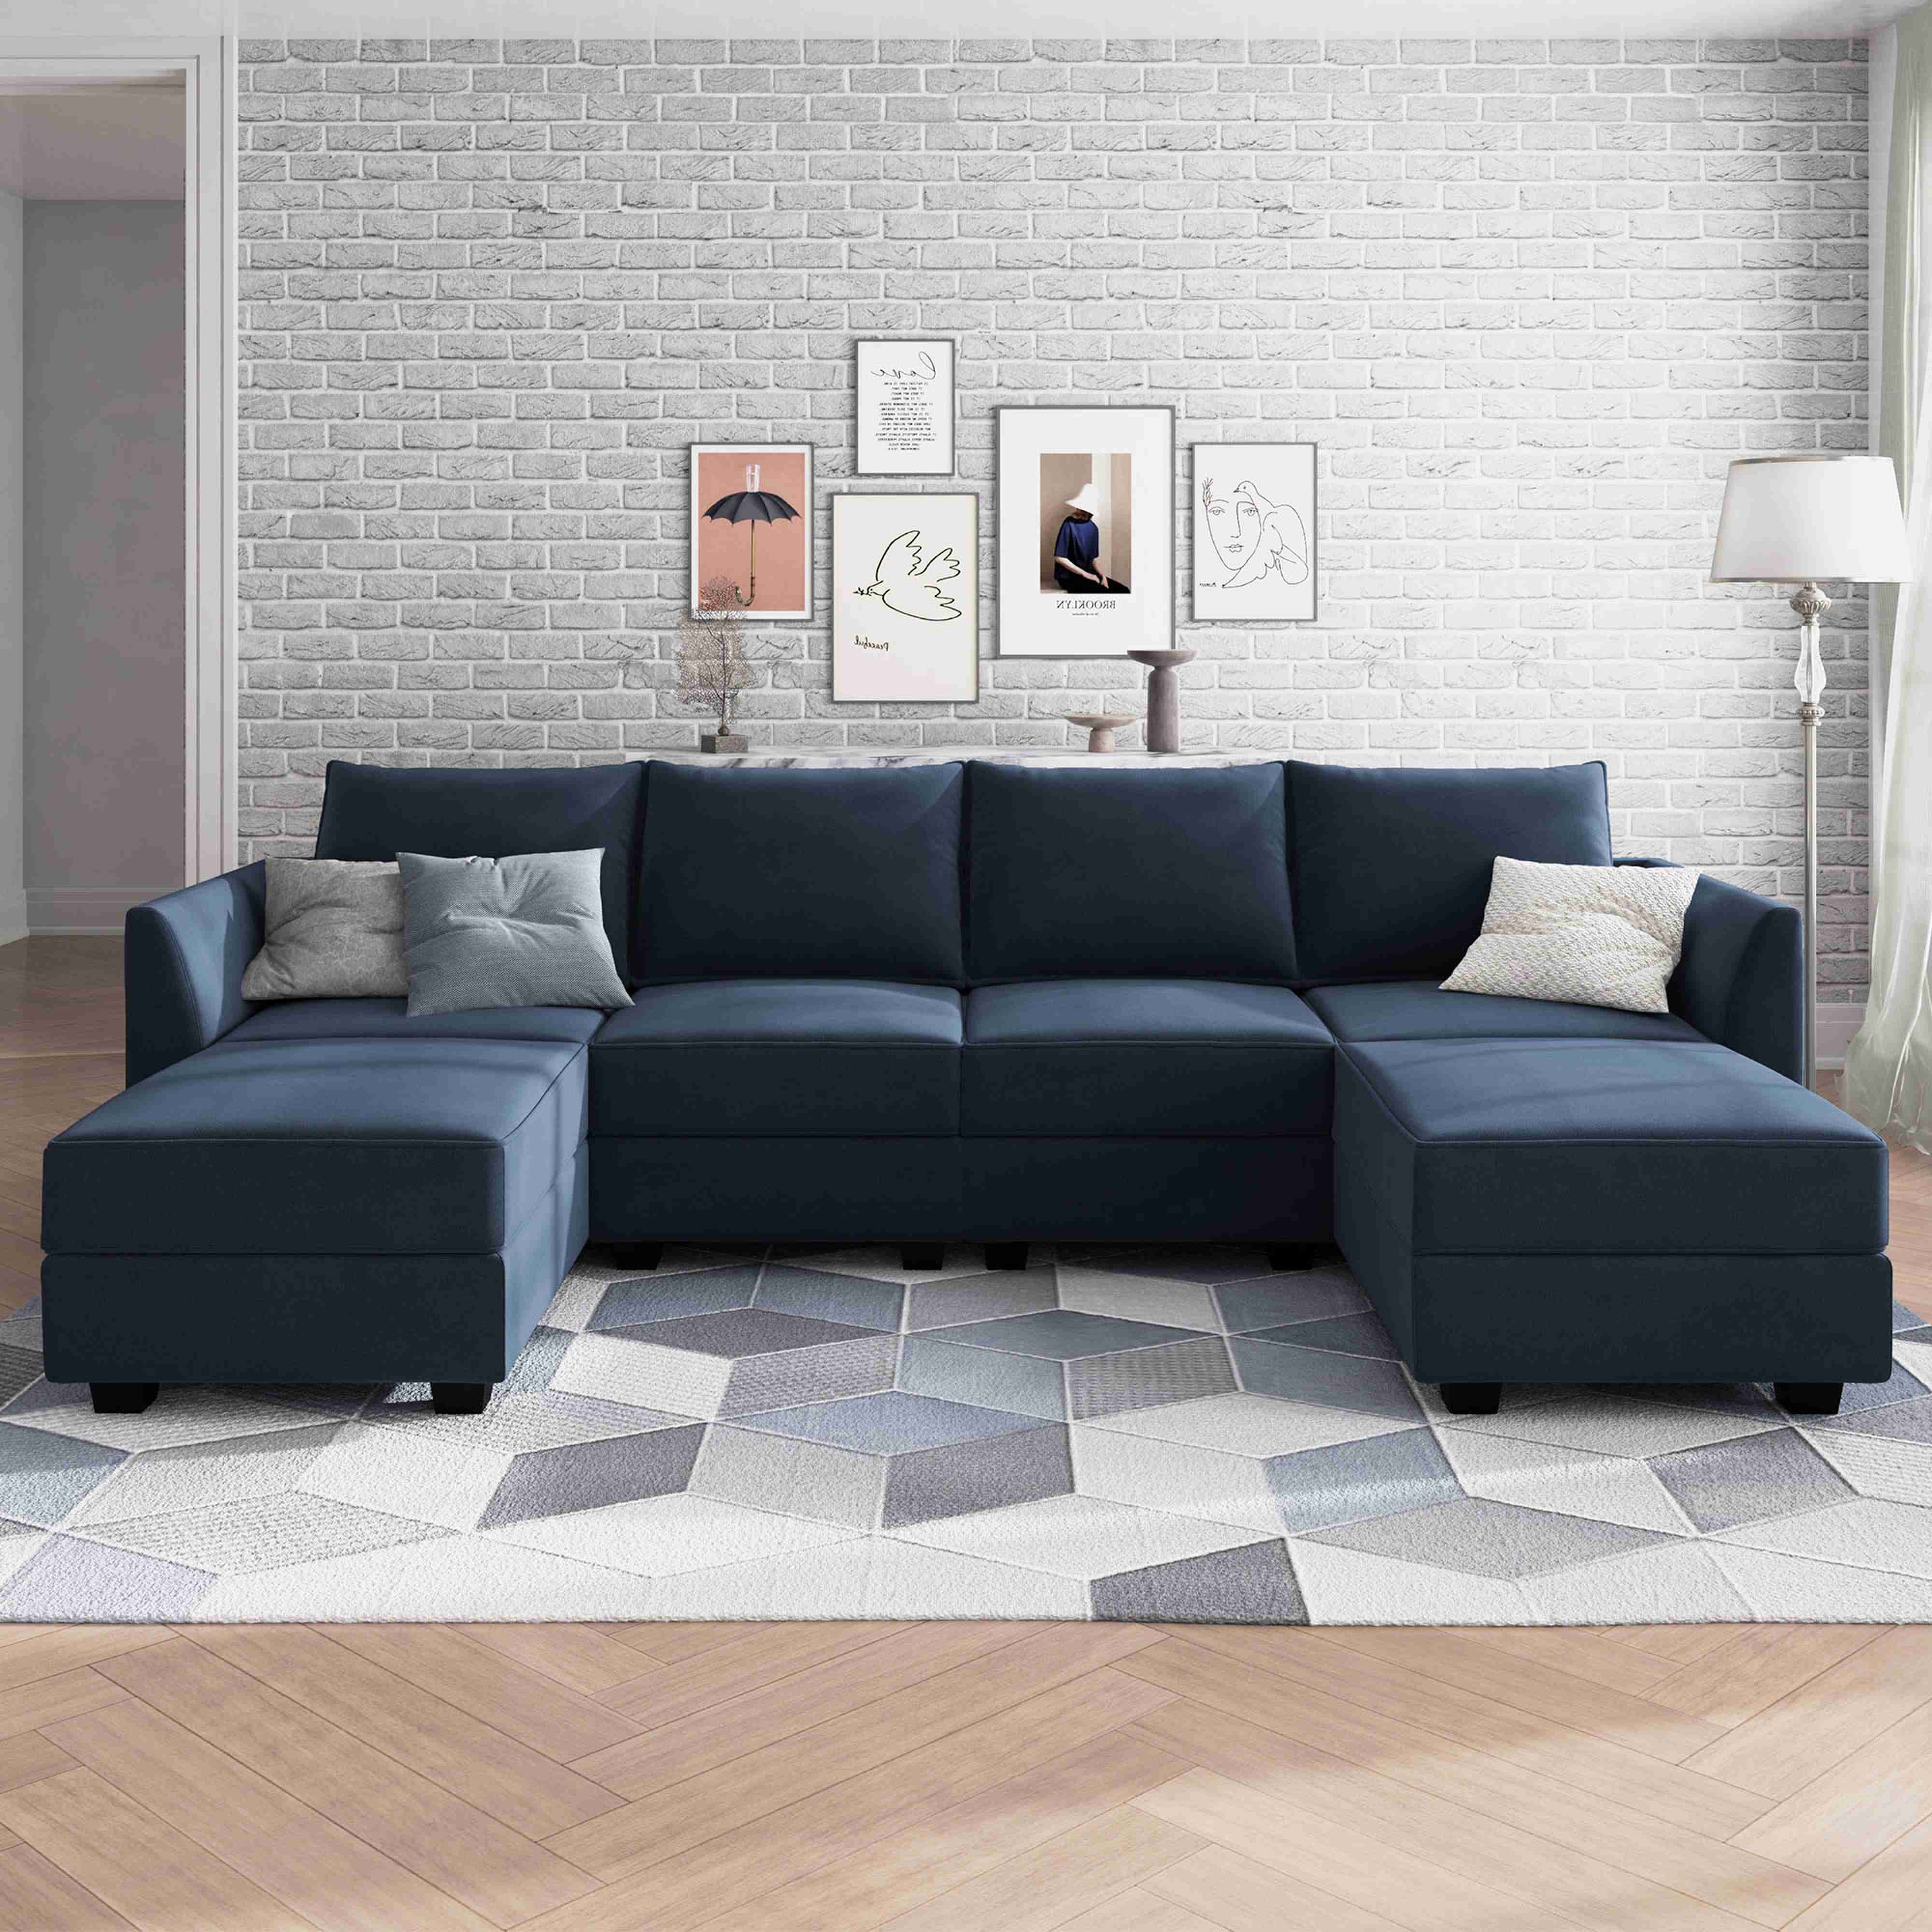 Honbay Velvet Upholstered Modular Sectional Sleeper Sofa With Storage  Ottomans, Free Combination Sofa For Living Room, Navy Blue – Walmart In Upholstered Modular Couches With Storage (View 17 of 20)